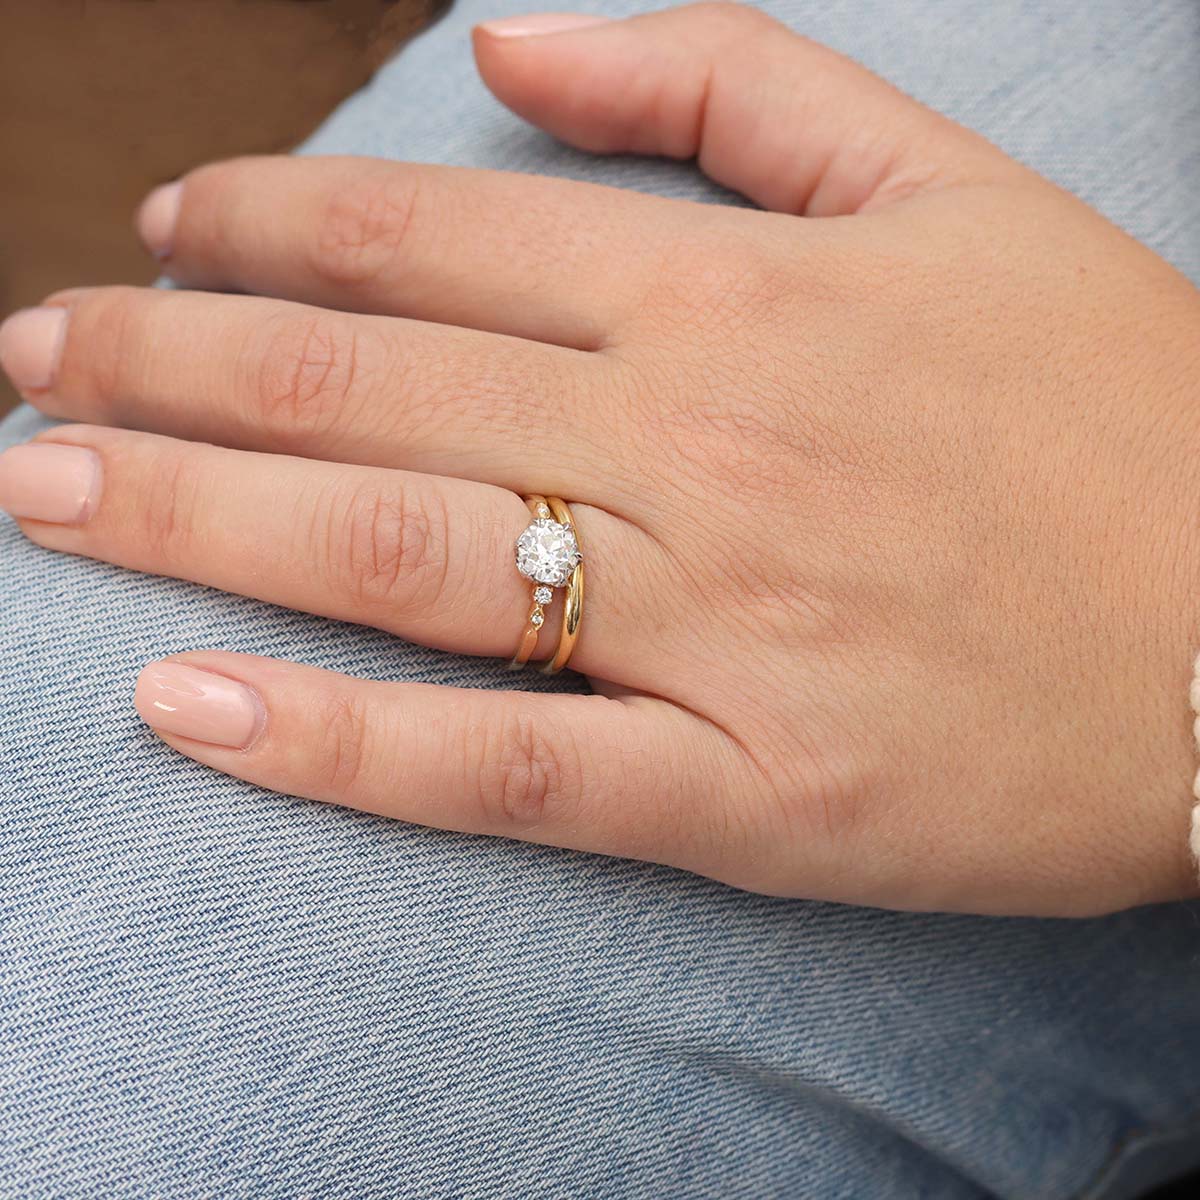 The Cordelia Replica Edwardian Engagement Ring #3510-10